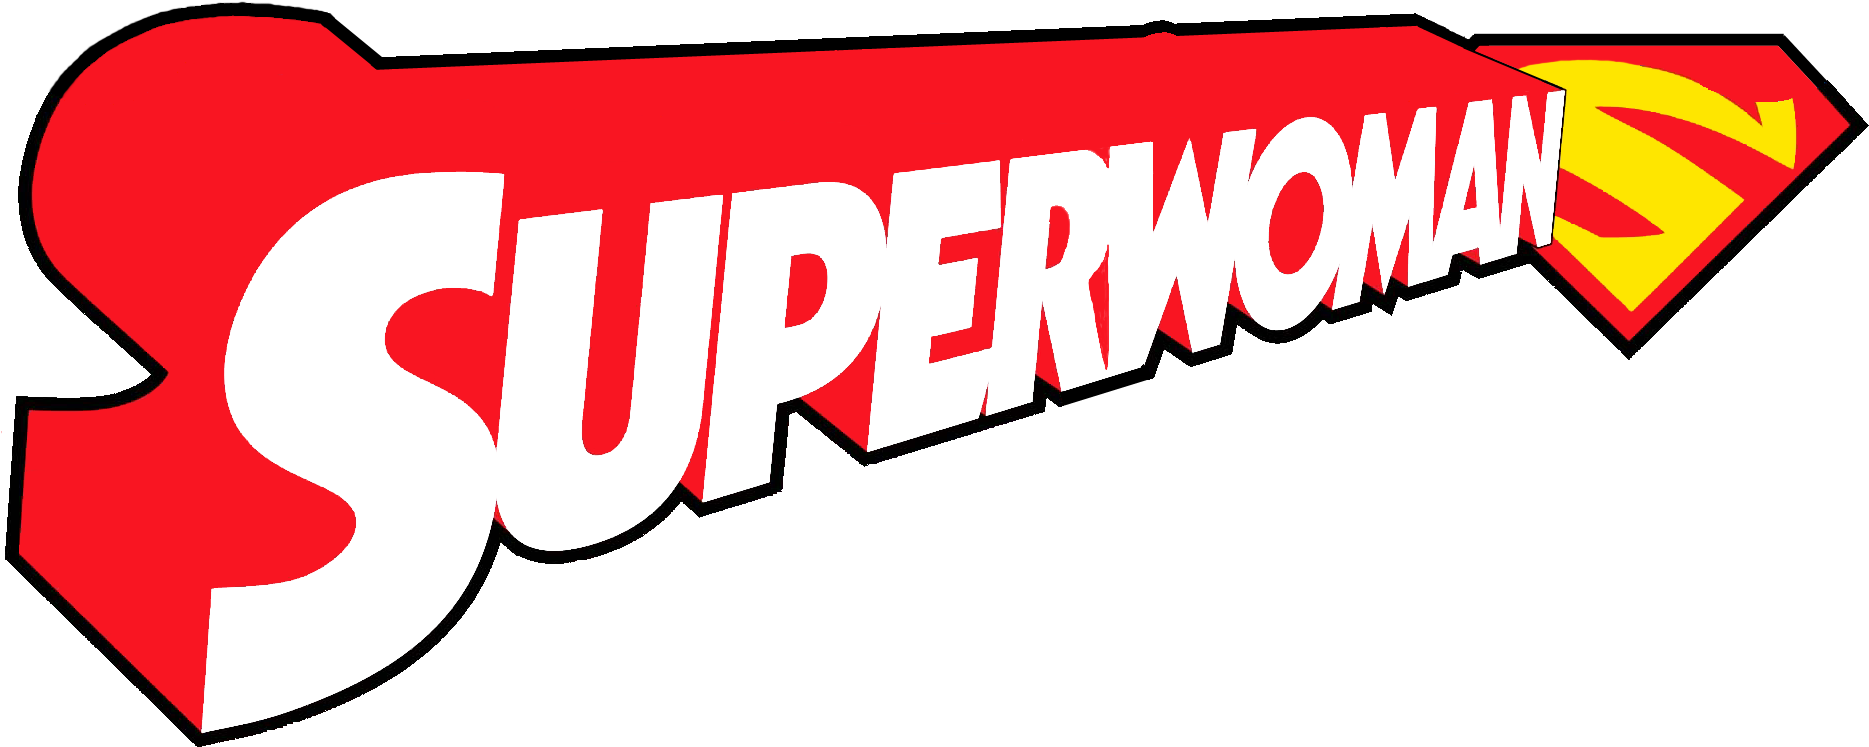 Download free photo of Superman,supergirl,superwoman,fly,superhero - from  needpix.com